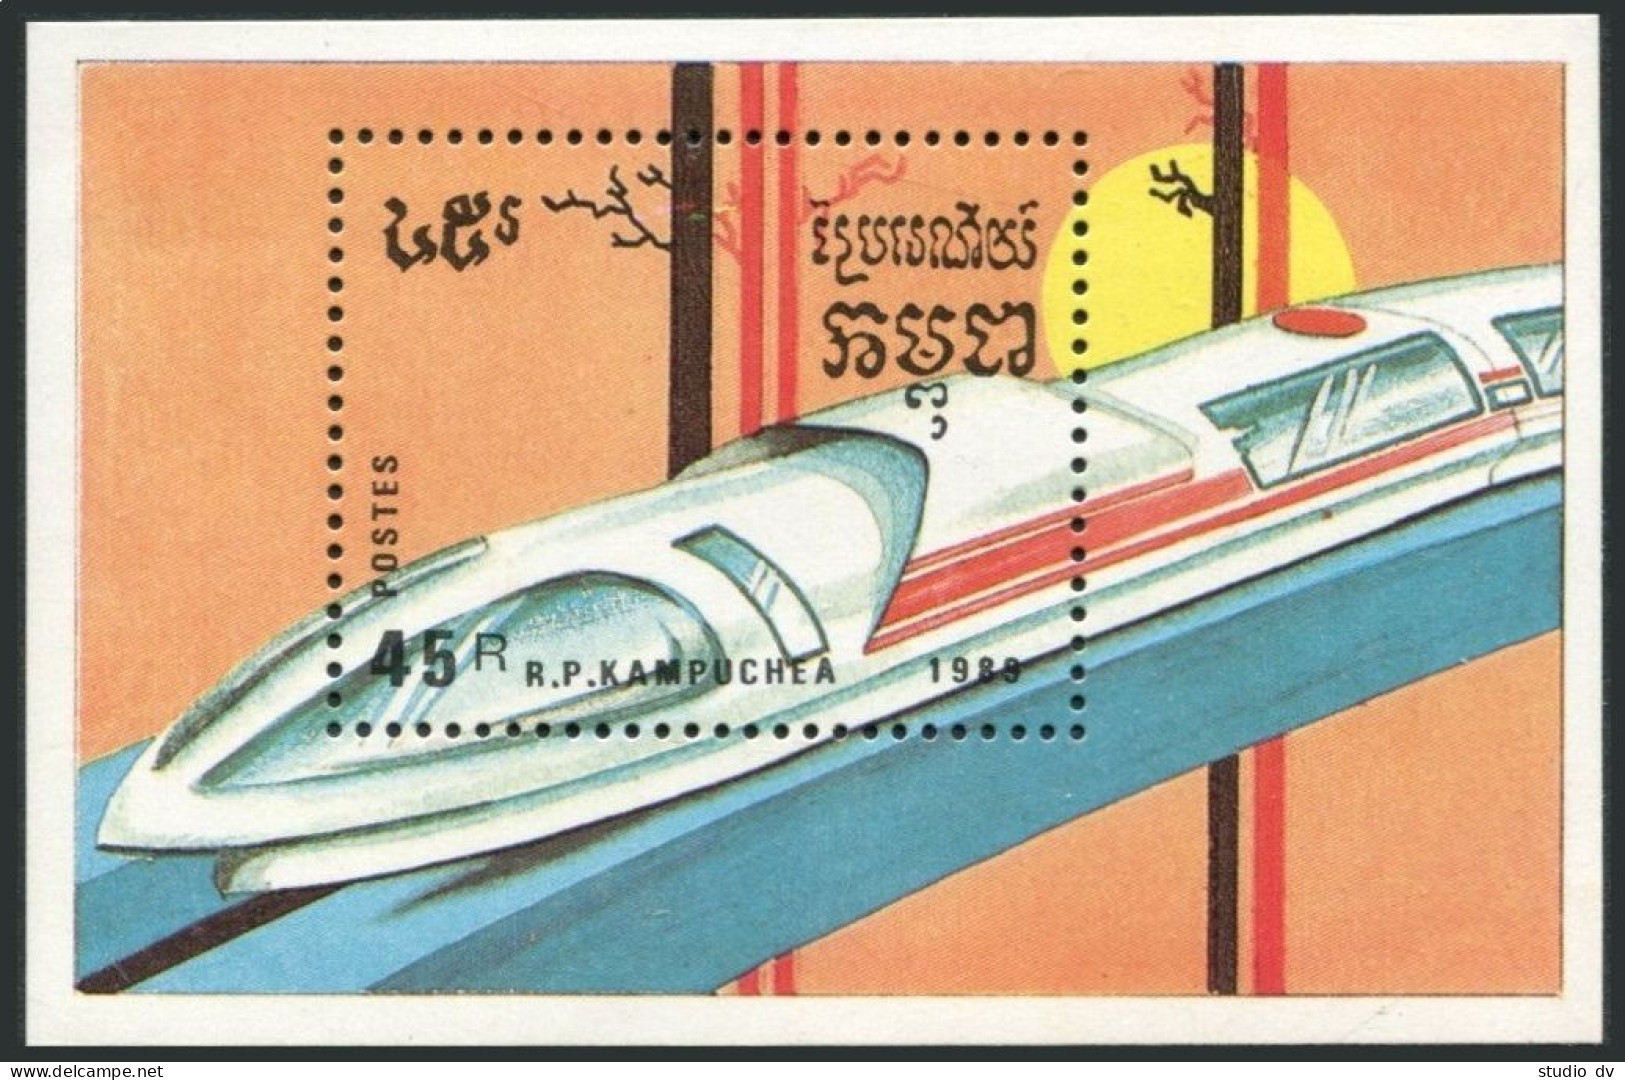 Cambodia 929-935,936,MNH.Michel 1007-1013,Bl.163. Trains,Locomotives 1989. - Camboya